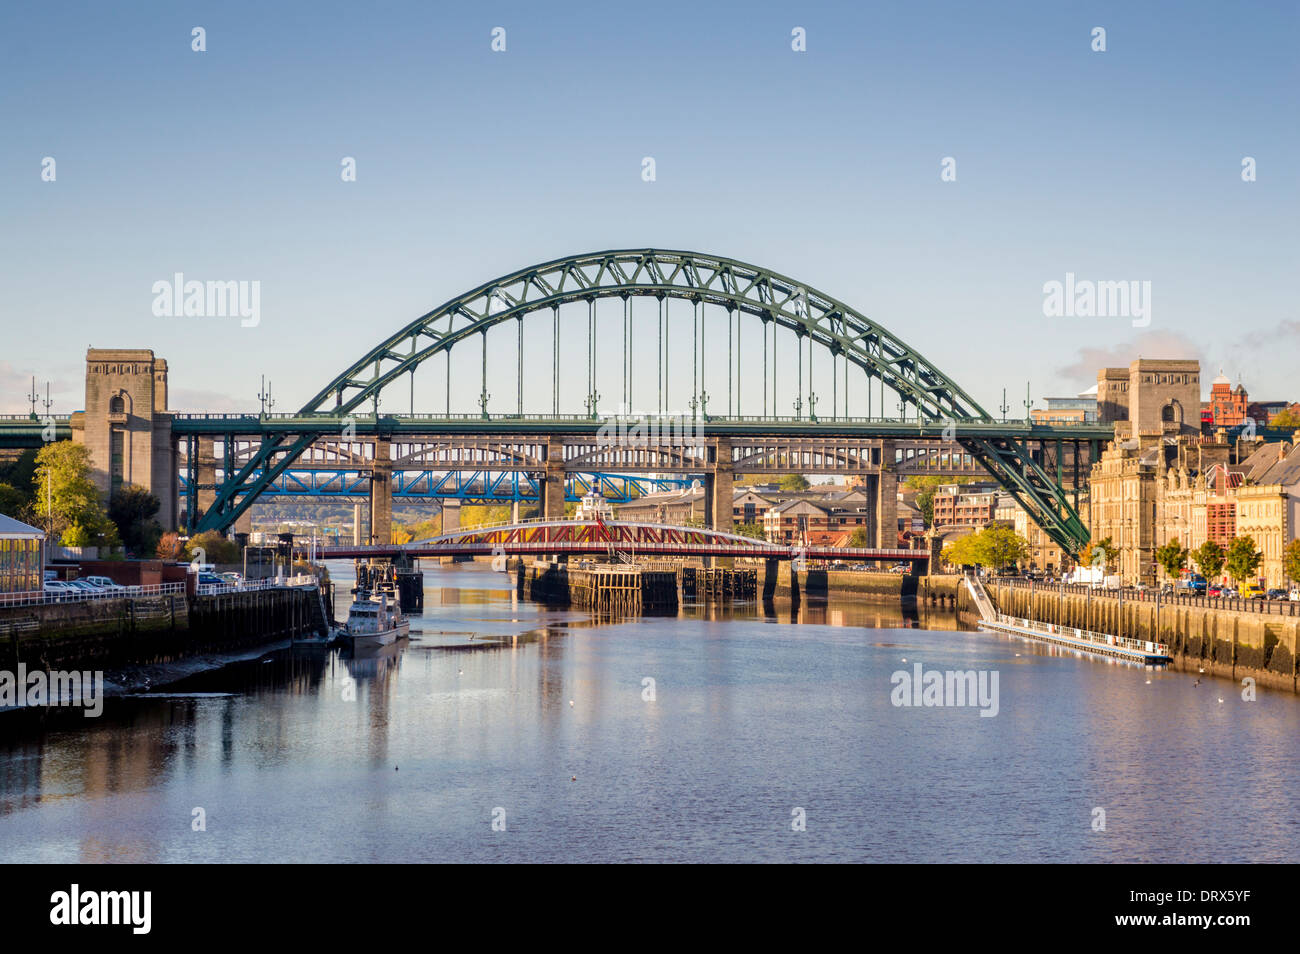 Tyne Bridge spanning the river Tyne to join Gateshead and Newcastle, UK. Stock Photo